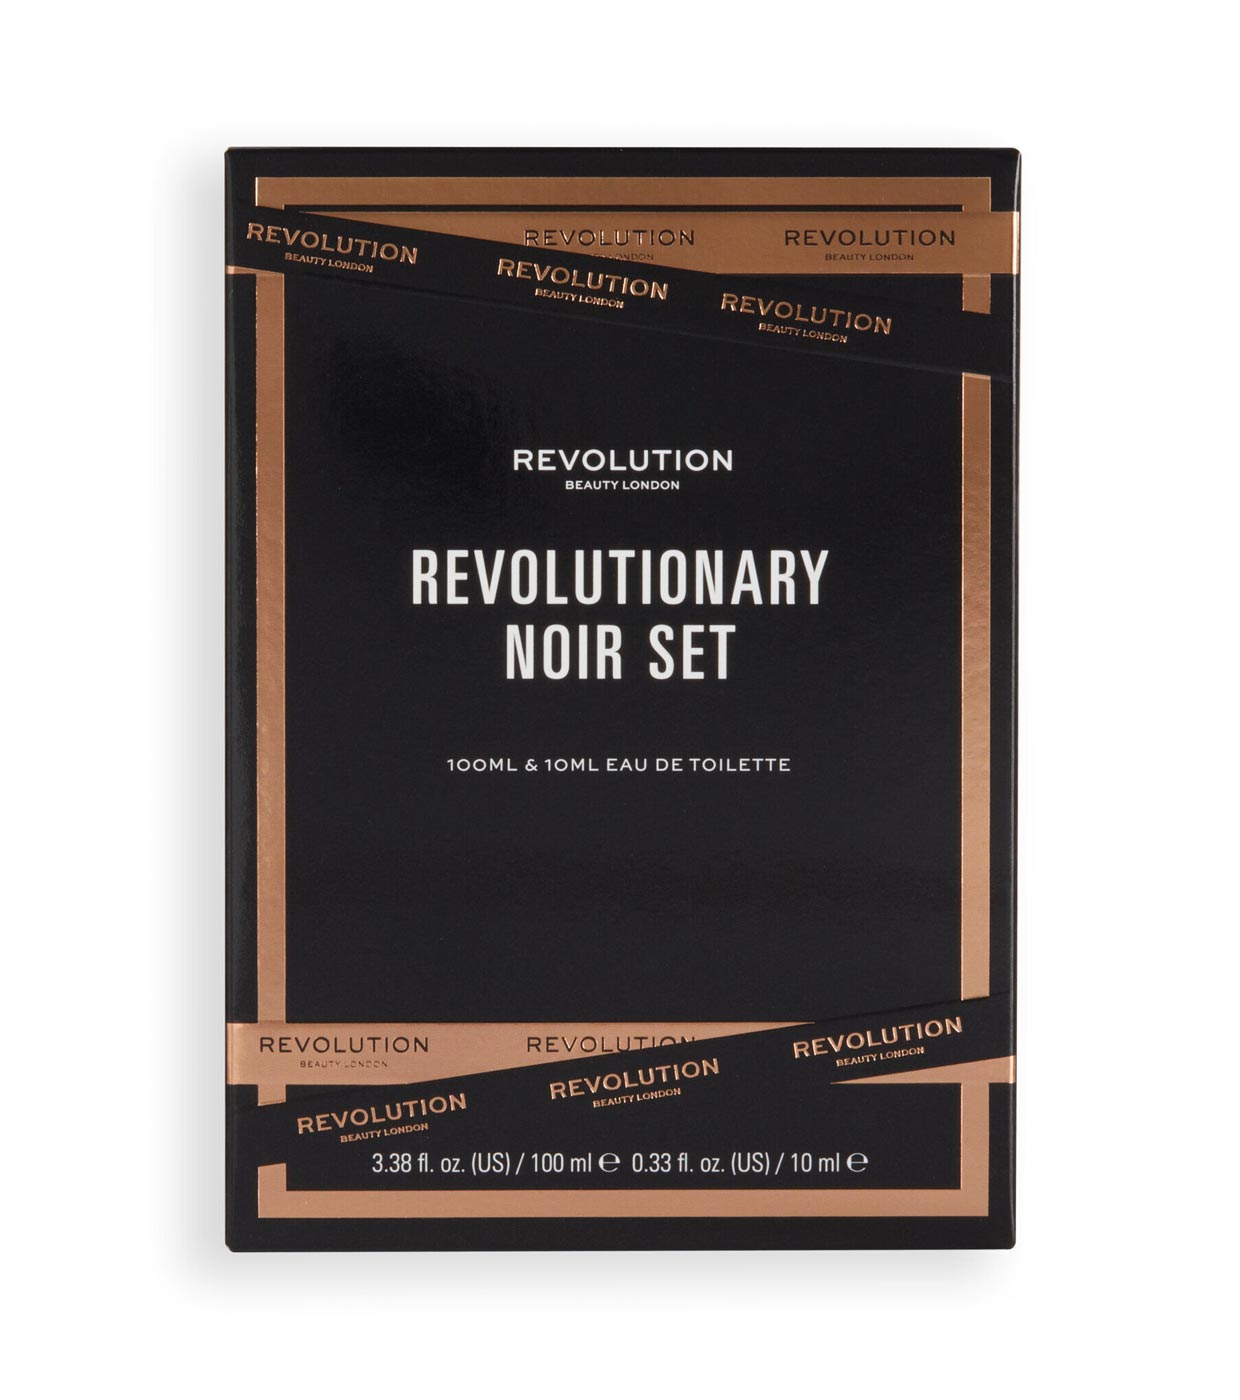 Revolution - Conjunto eau de toilette 100ml e 10ml - Revolutionary Noir